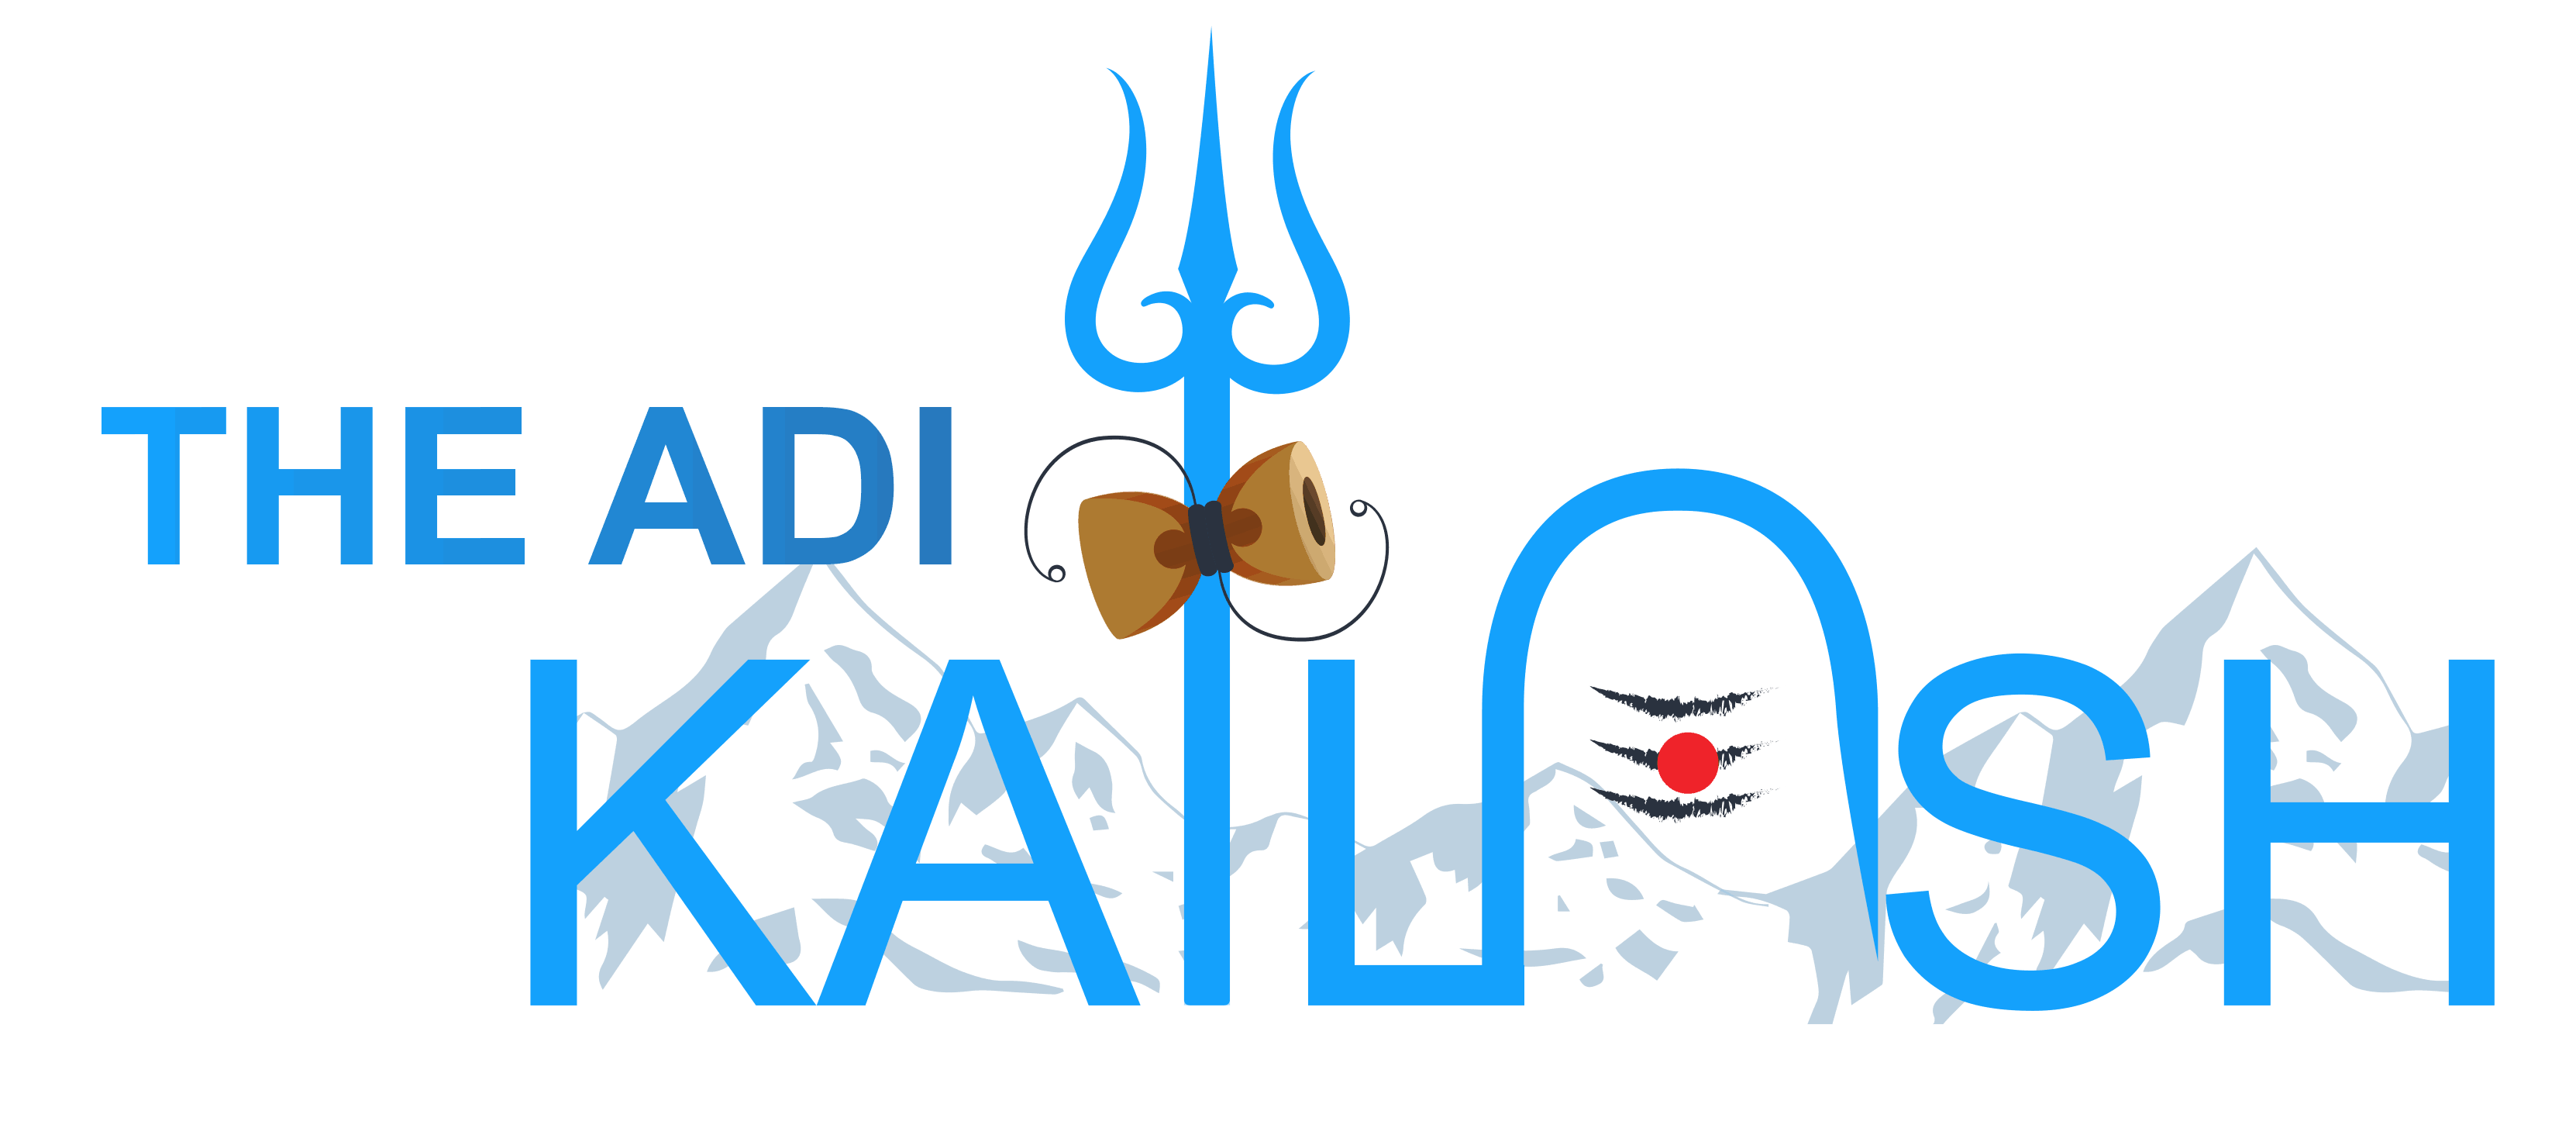 The Adi Kailash